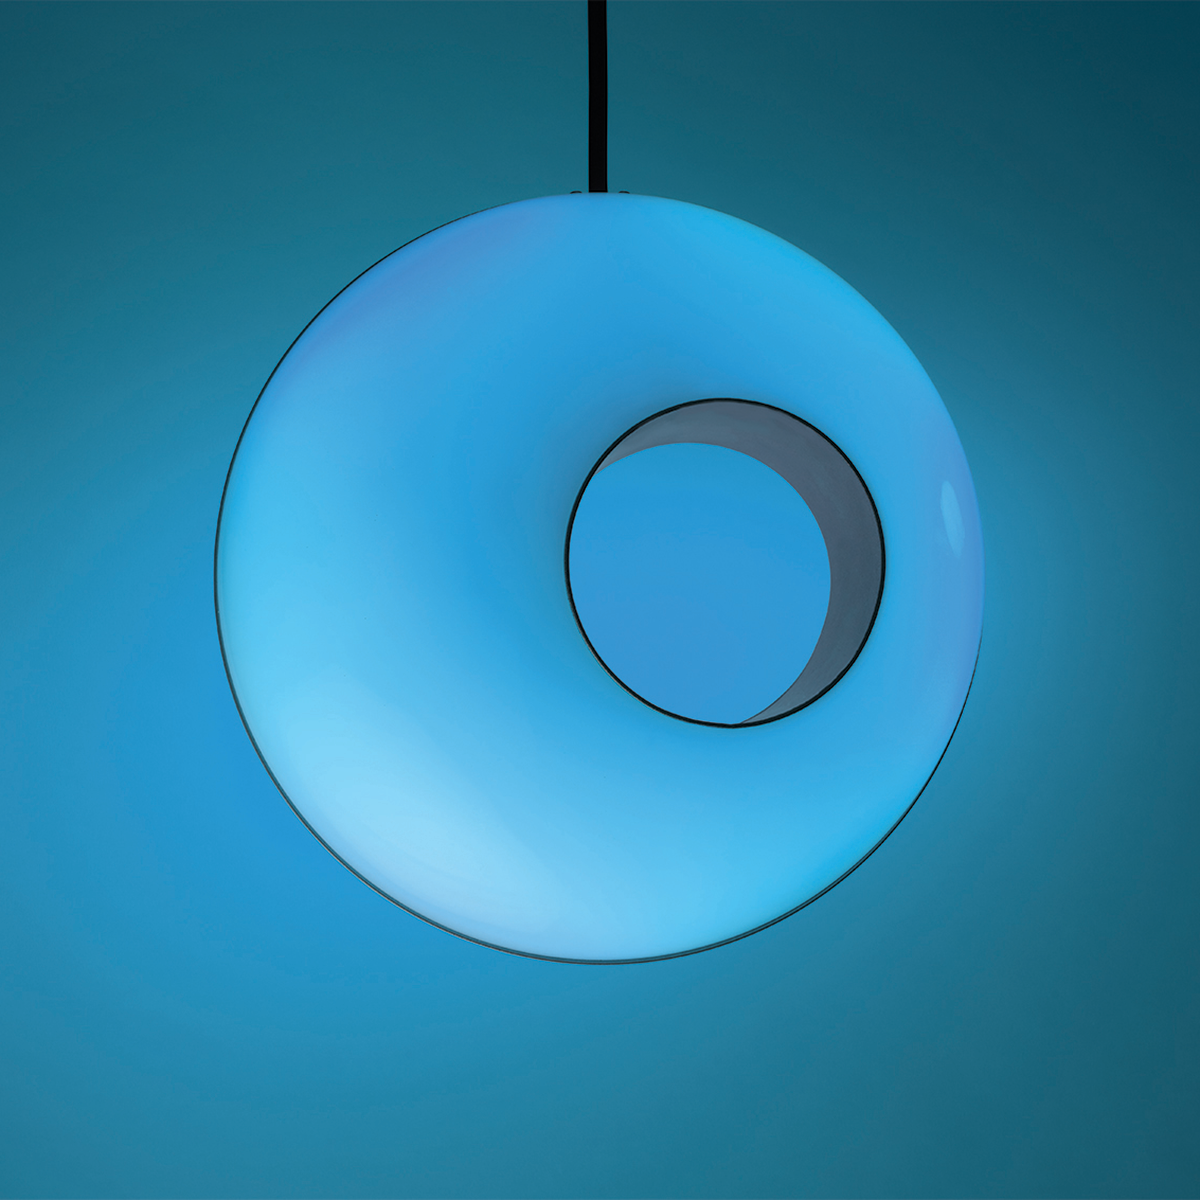 RGB globe pendant light shown in Blue. 